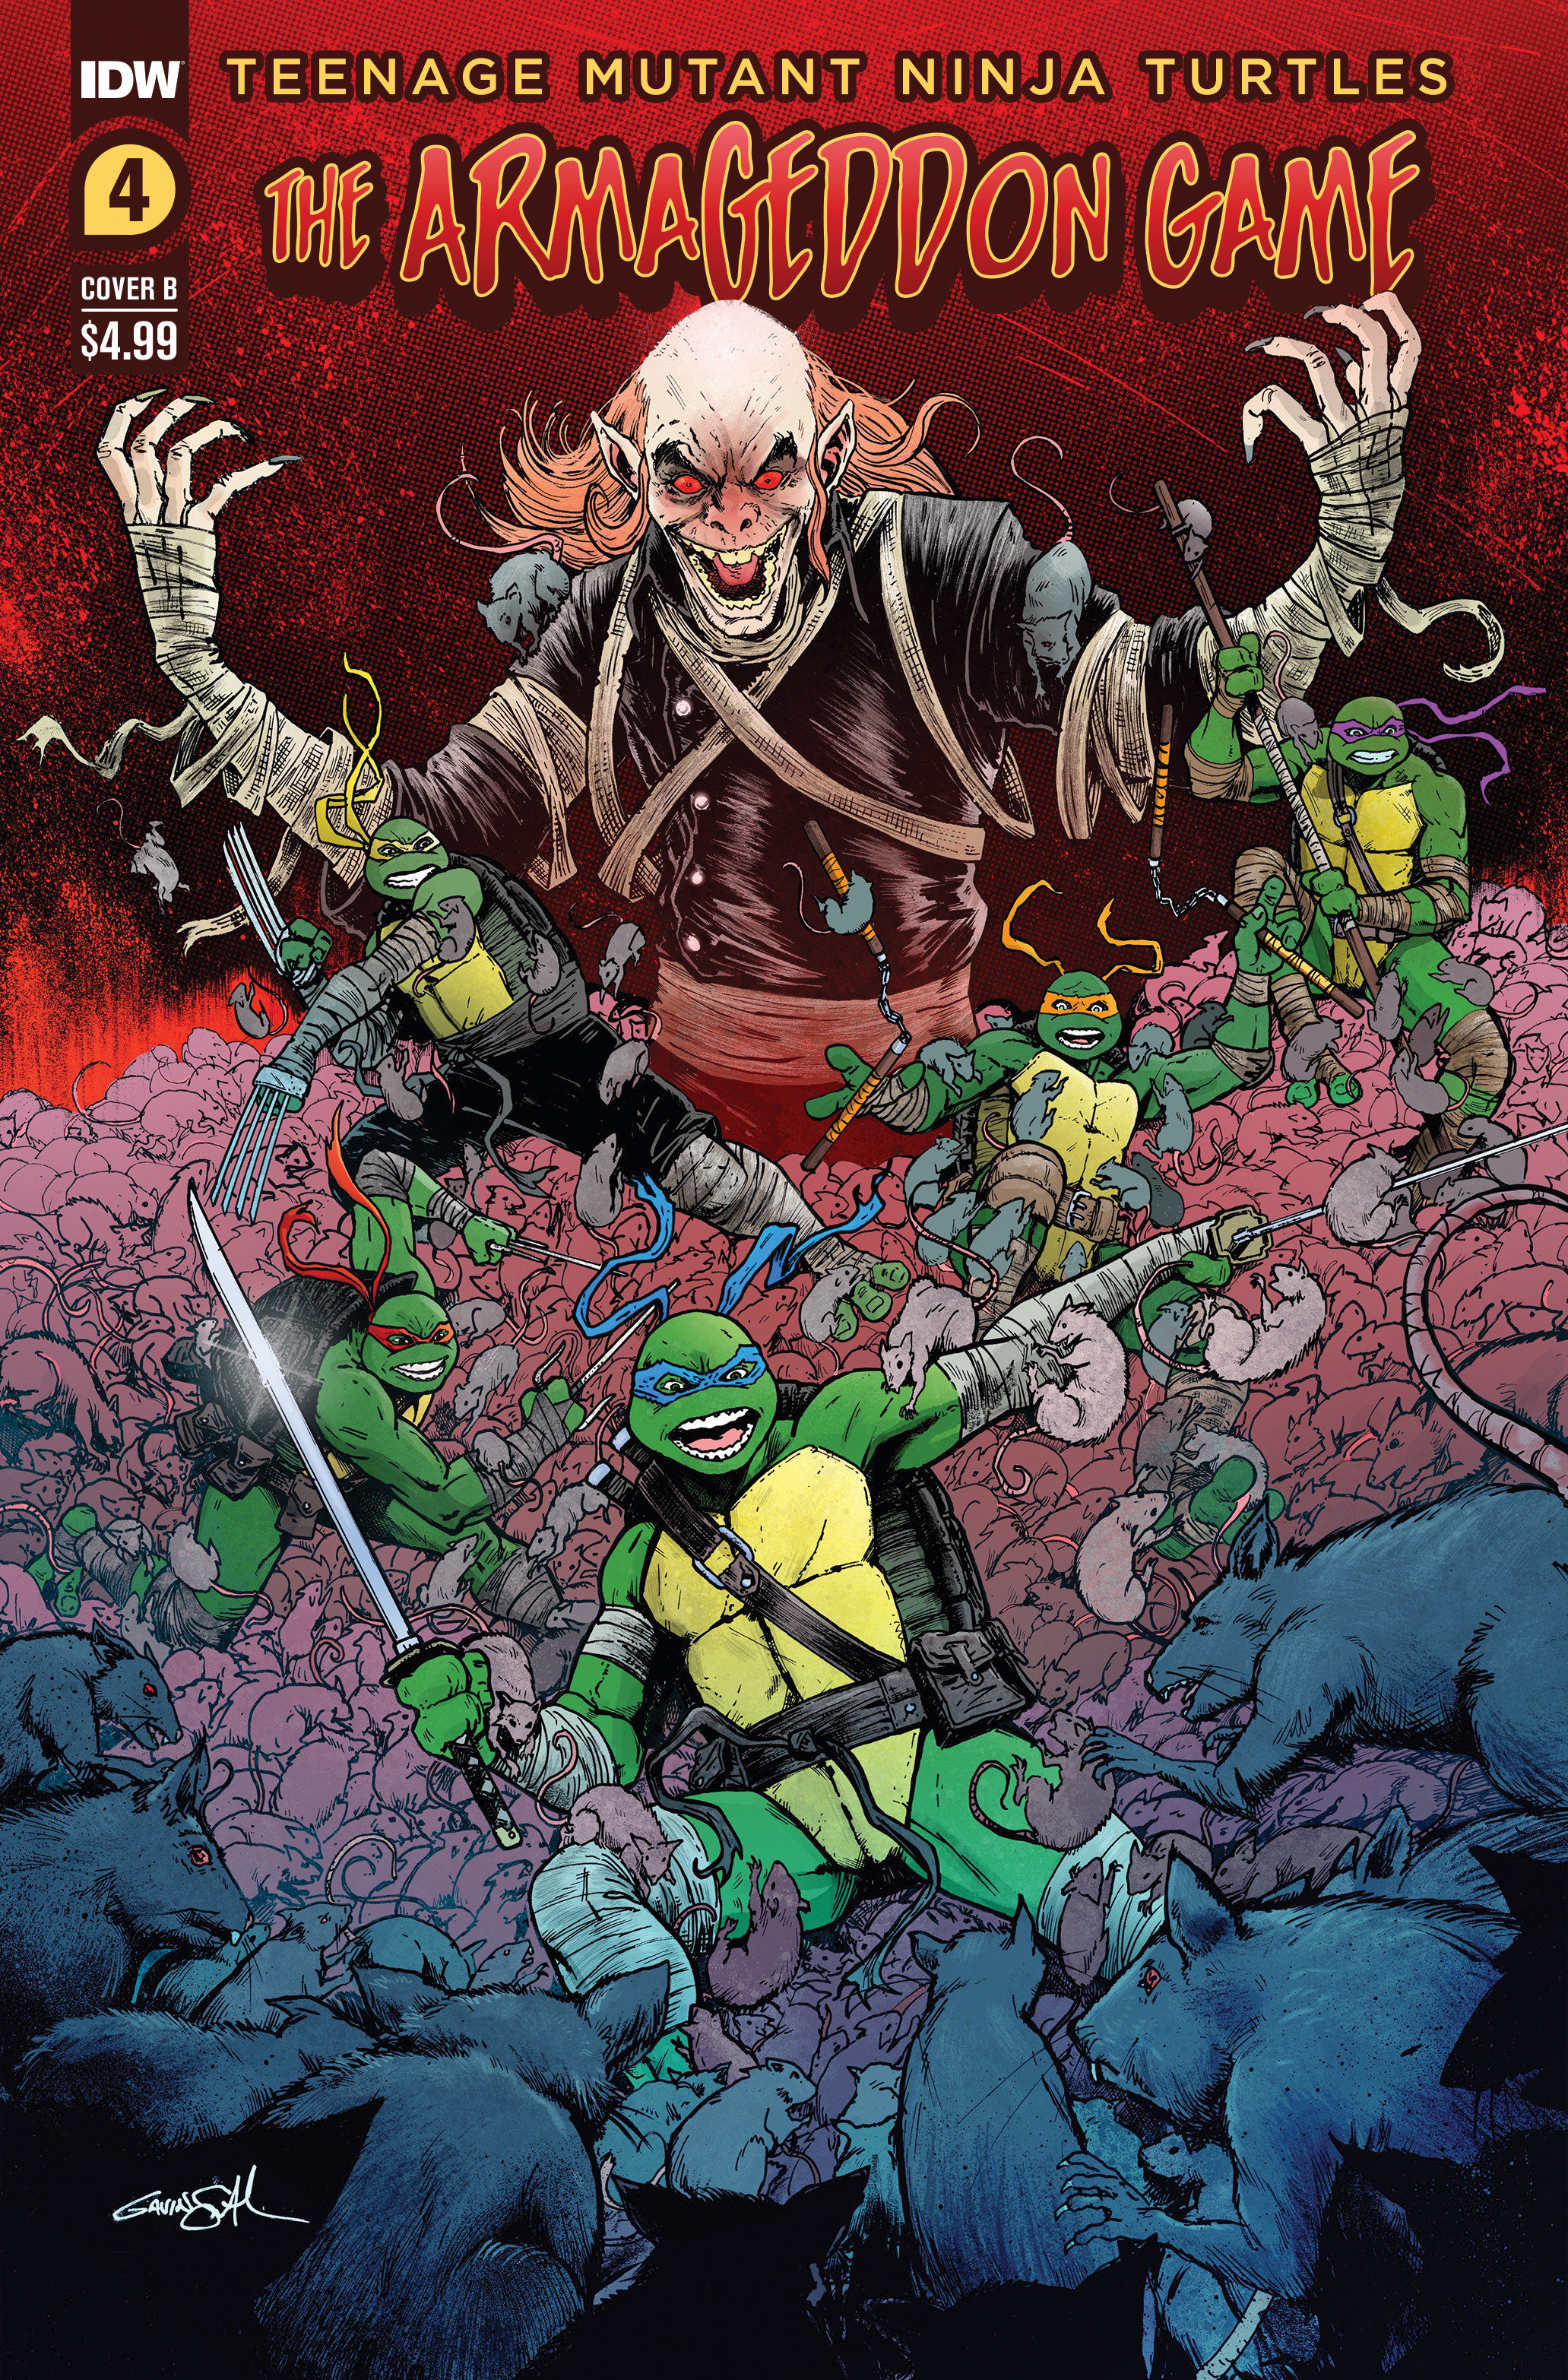 Teenage Mutant Ninja Turtles Armageddon Game #4 Cover B Smith (Mature)